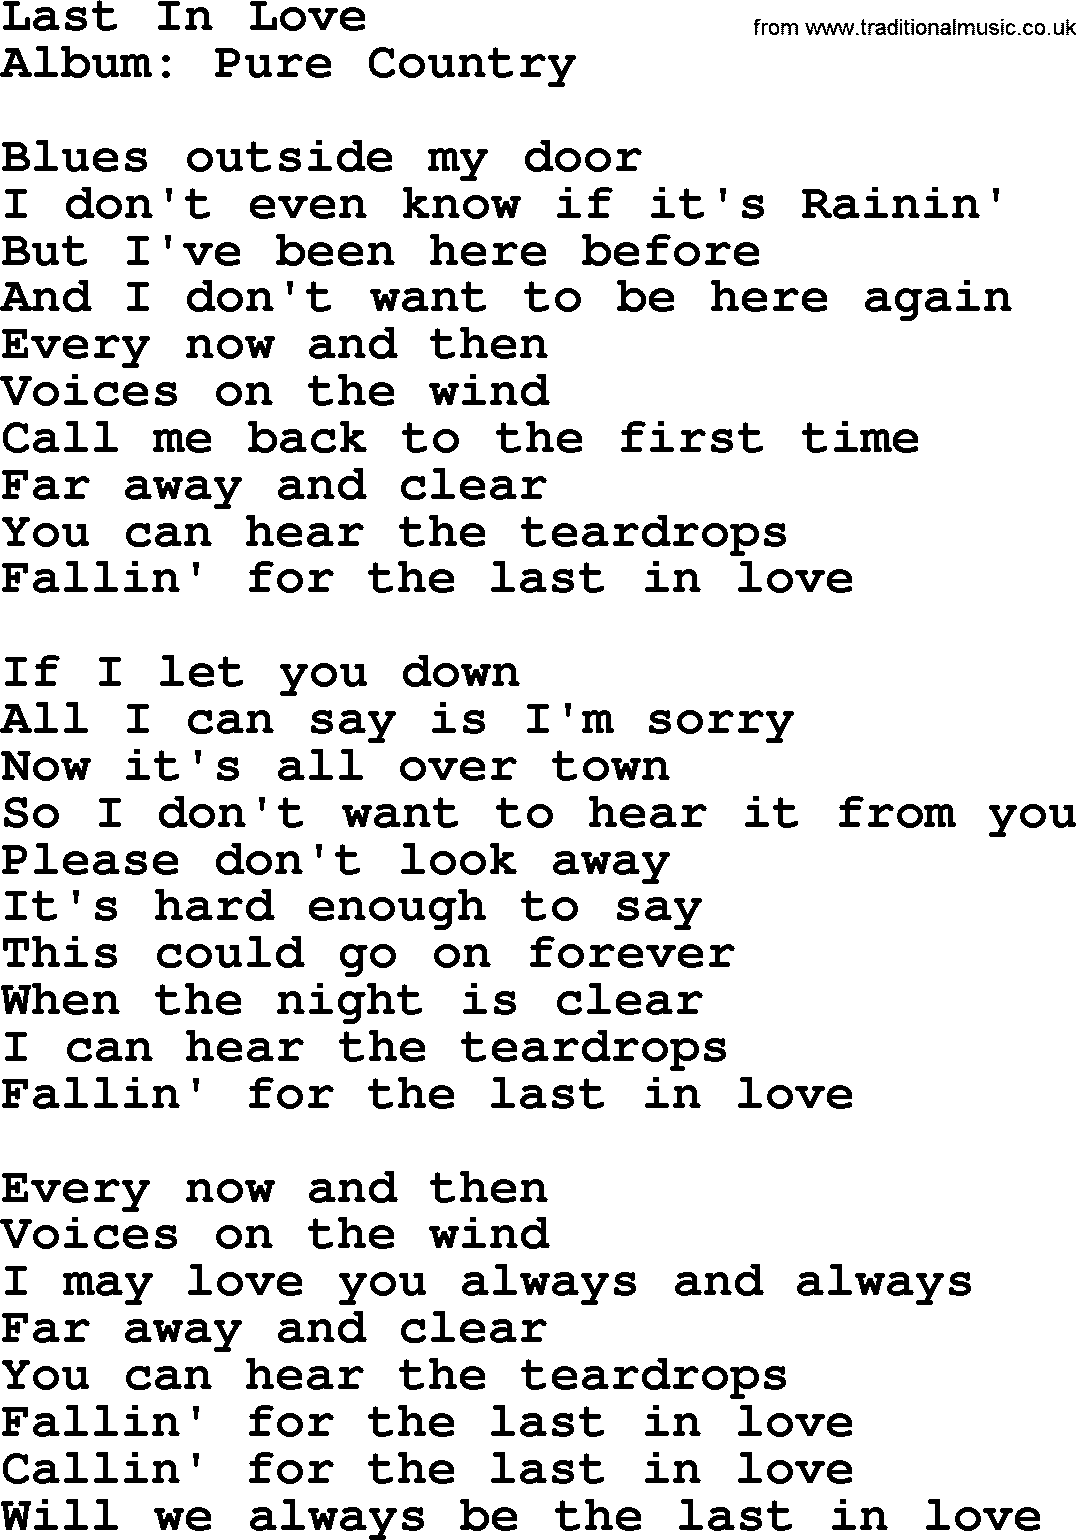 George Strait song: Last In Love, lyrics